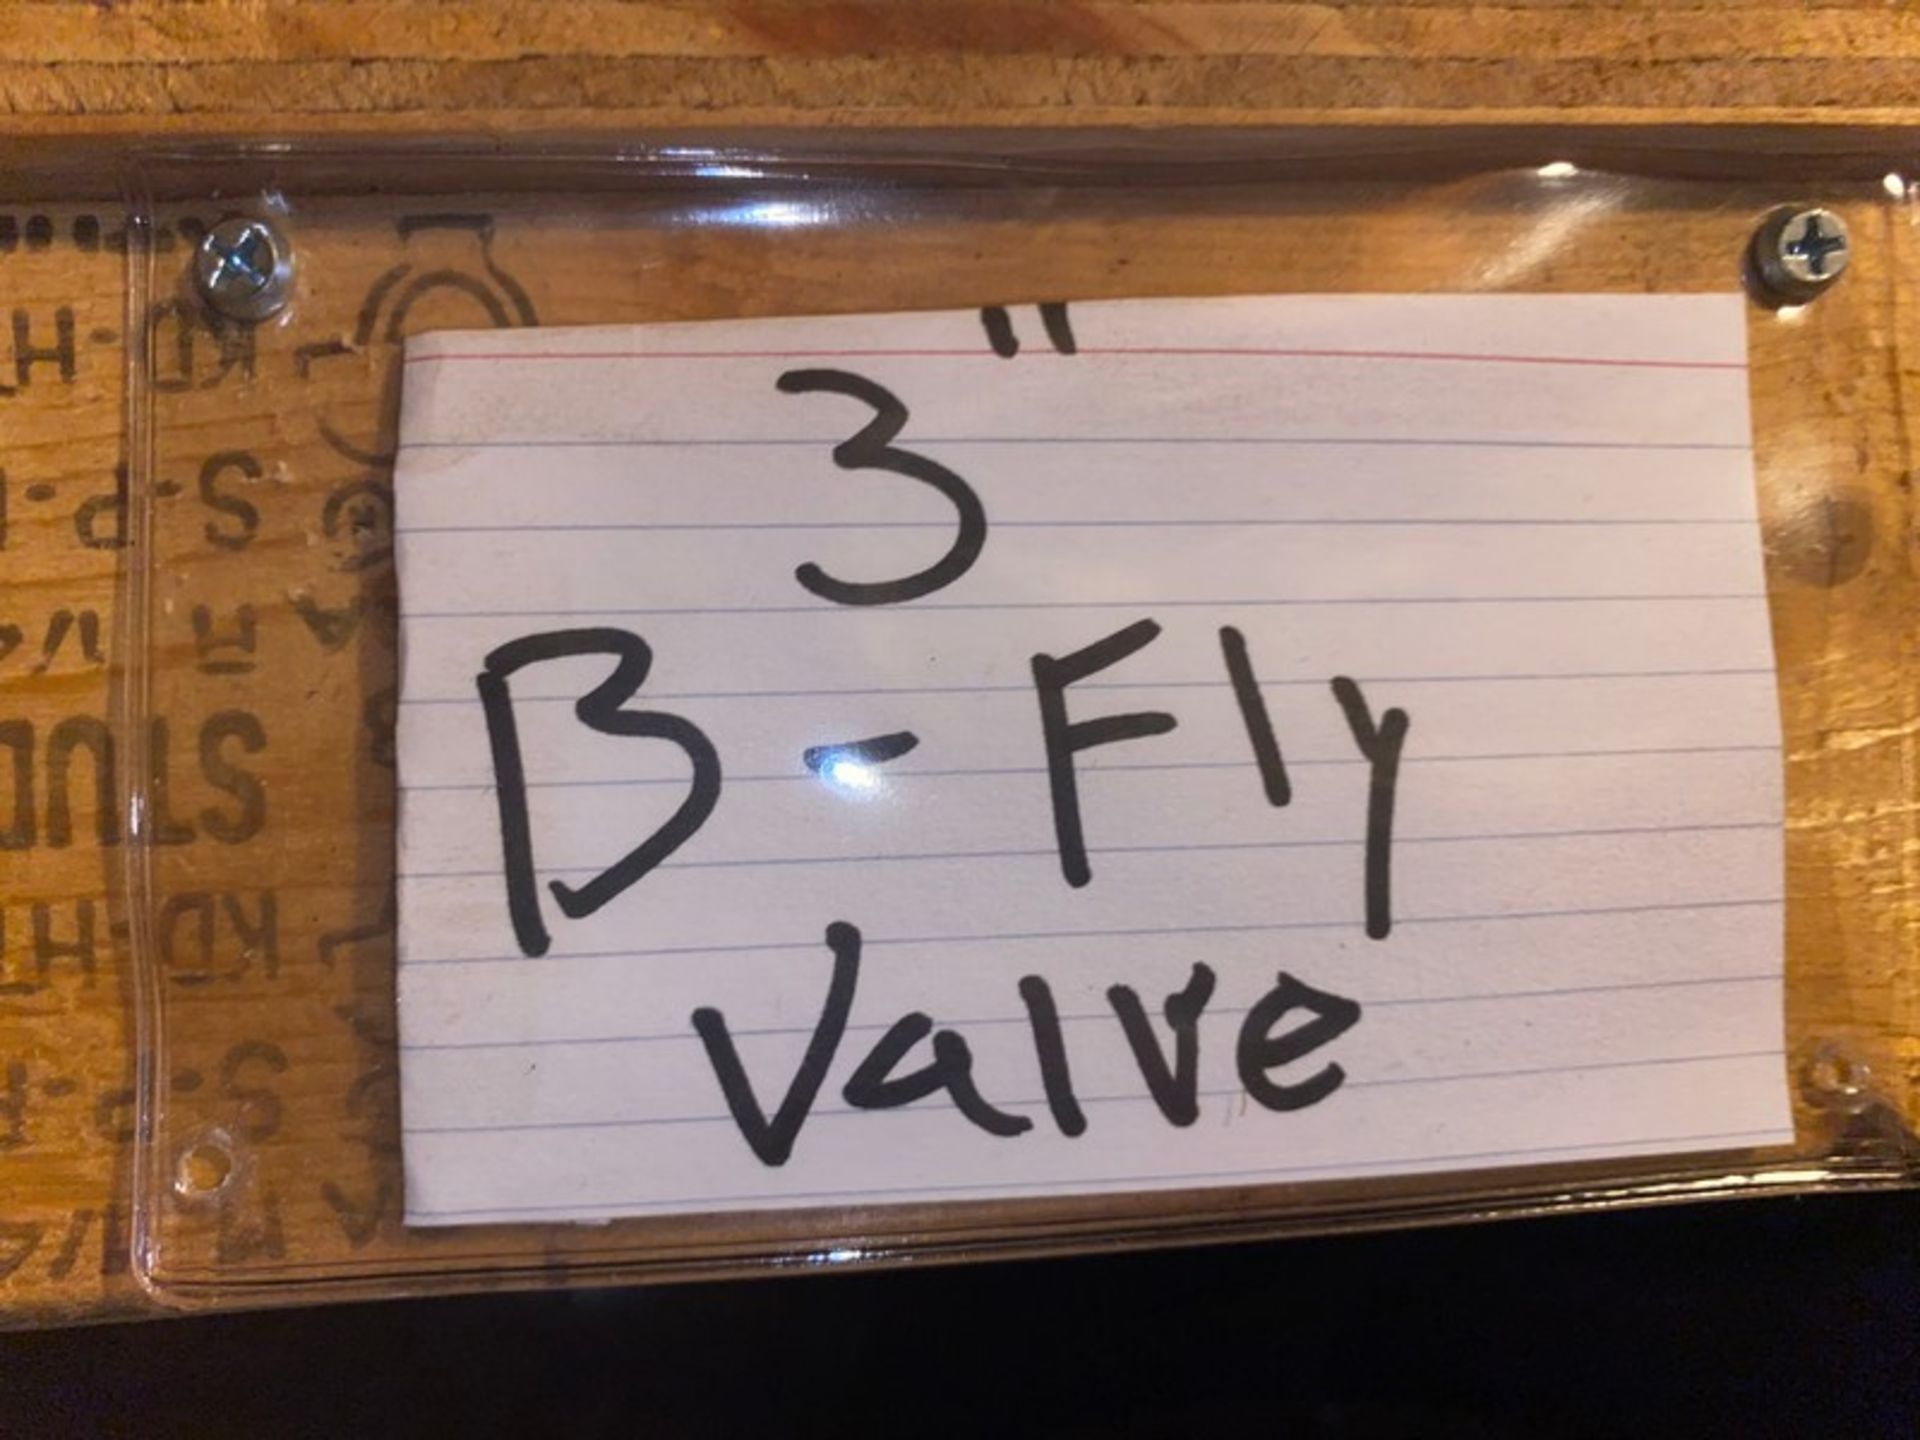 2 1/2 B-Fly Valve3” B-Fly Valve4” B-Fly Valve5” B-Fly Valve6” Butterfly Valve2” Groved Valve3” - Image 5 of 6